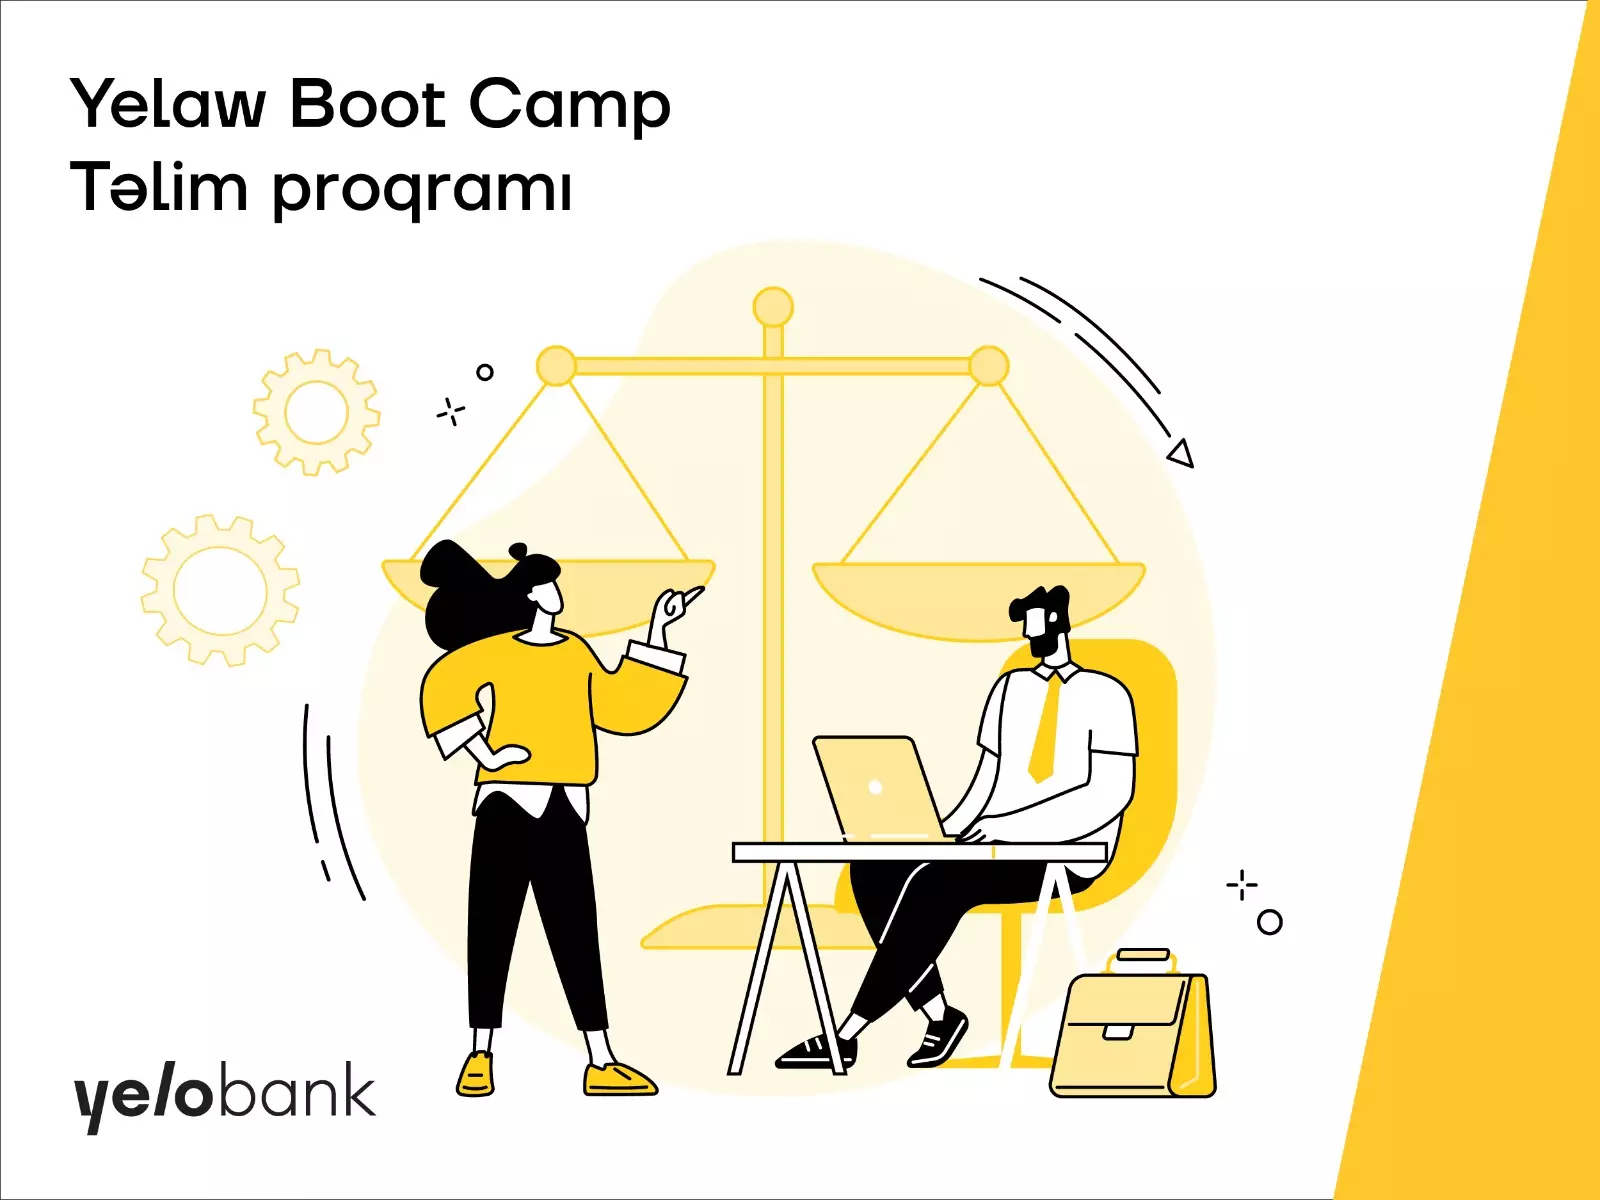 Yelo Bank “Yelaw Boot Camp” proqramını elan edir